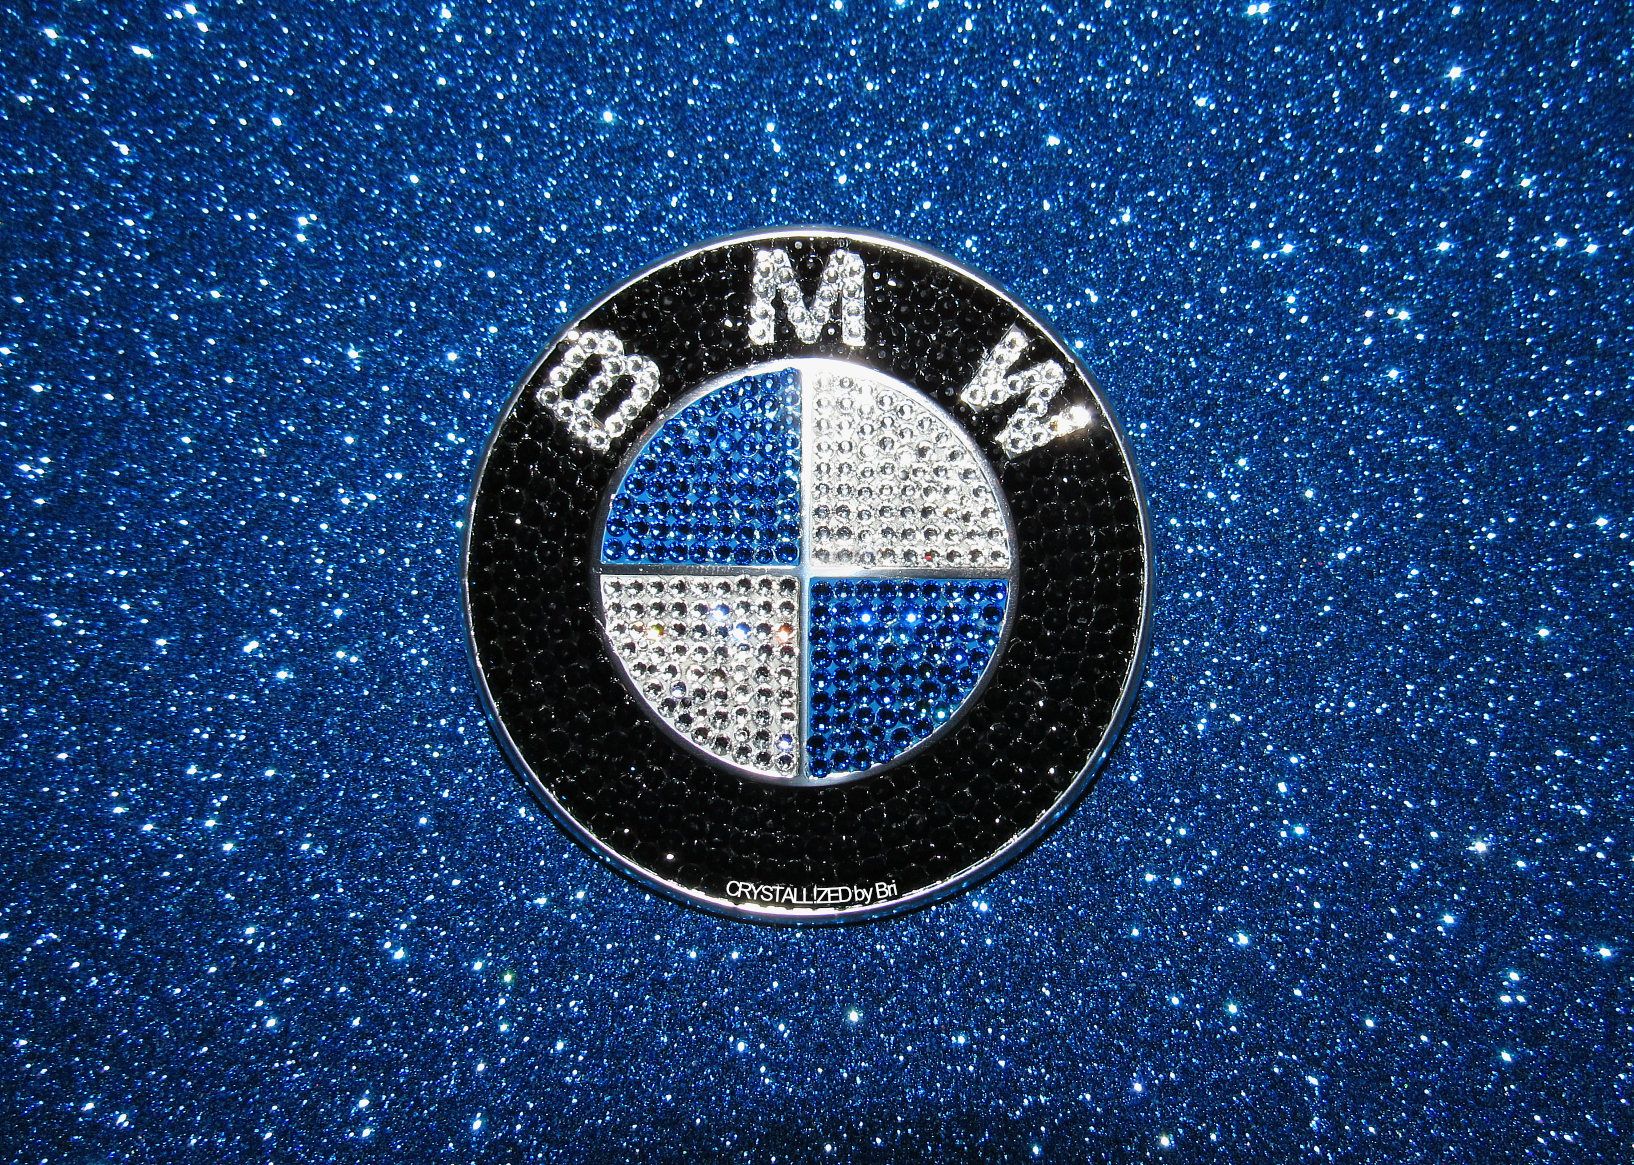 BMW Emblem With Swarovski or High Quality Pinkwhite Crystals